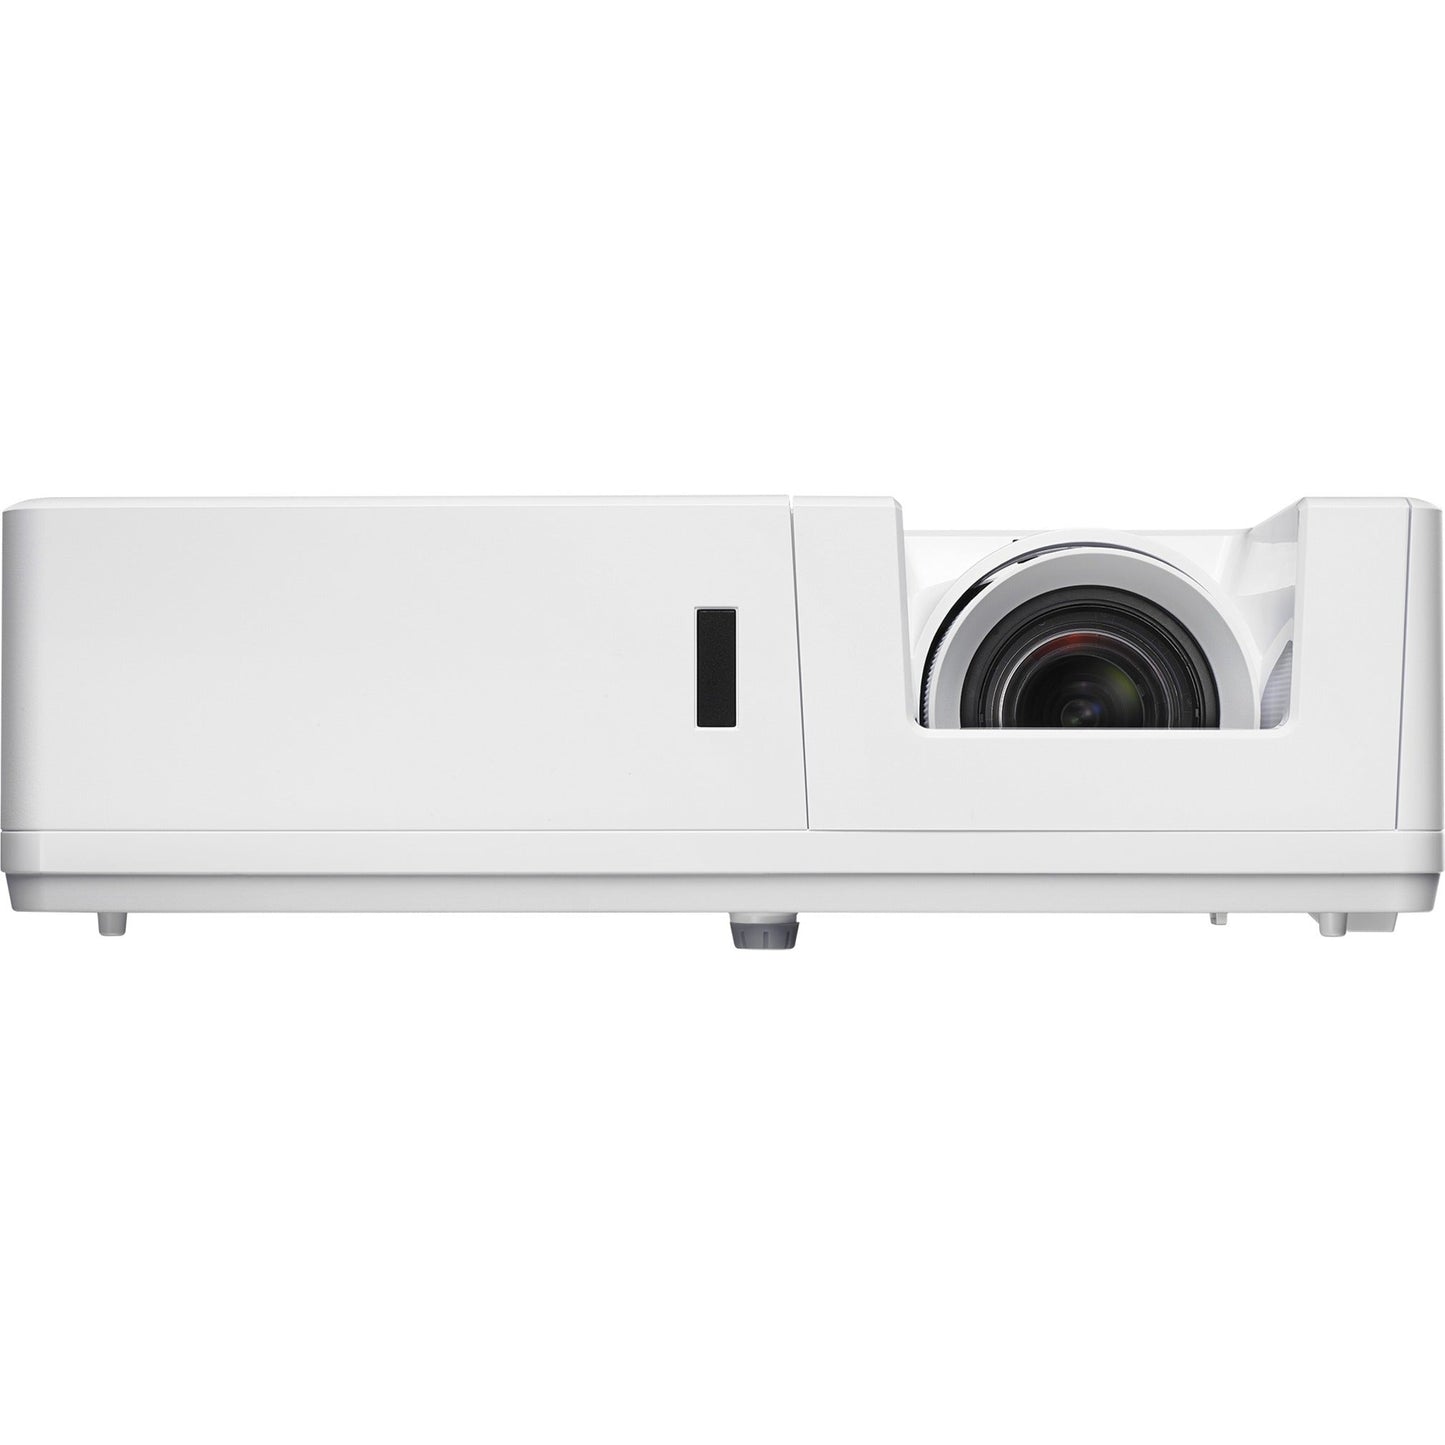 Optoma ProScene ZH606-W 3D Ready DLP Projector - 16:9 - White